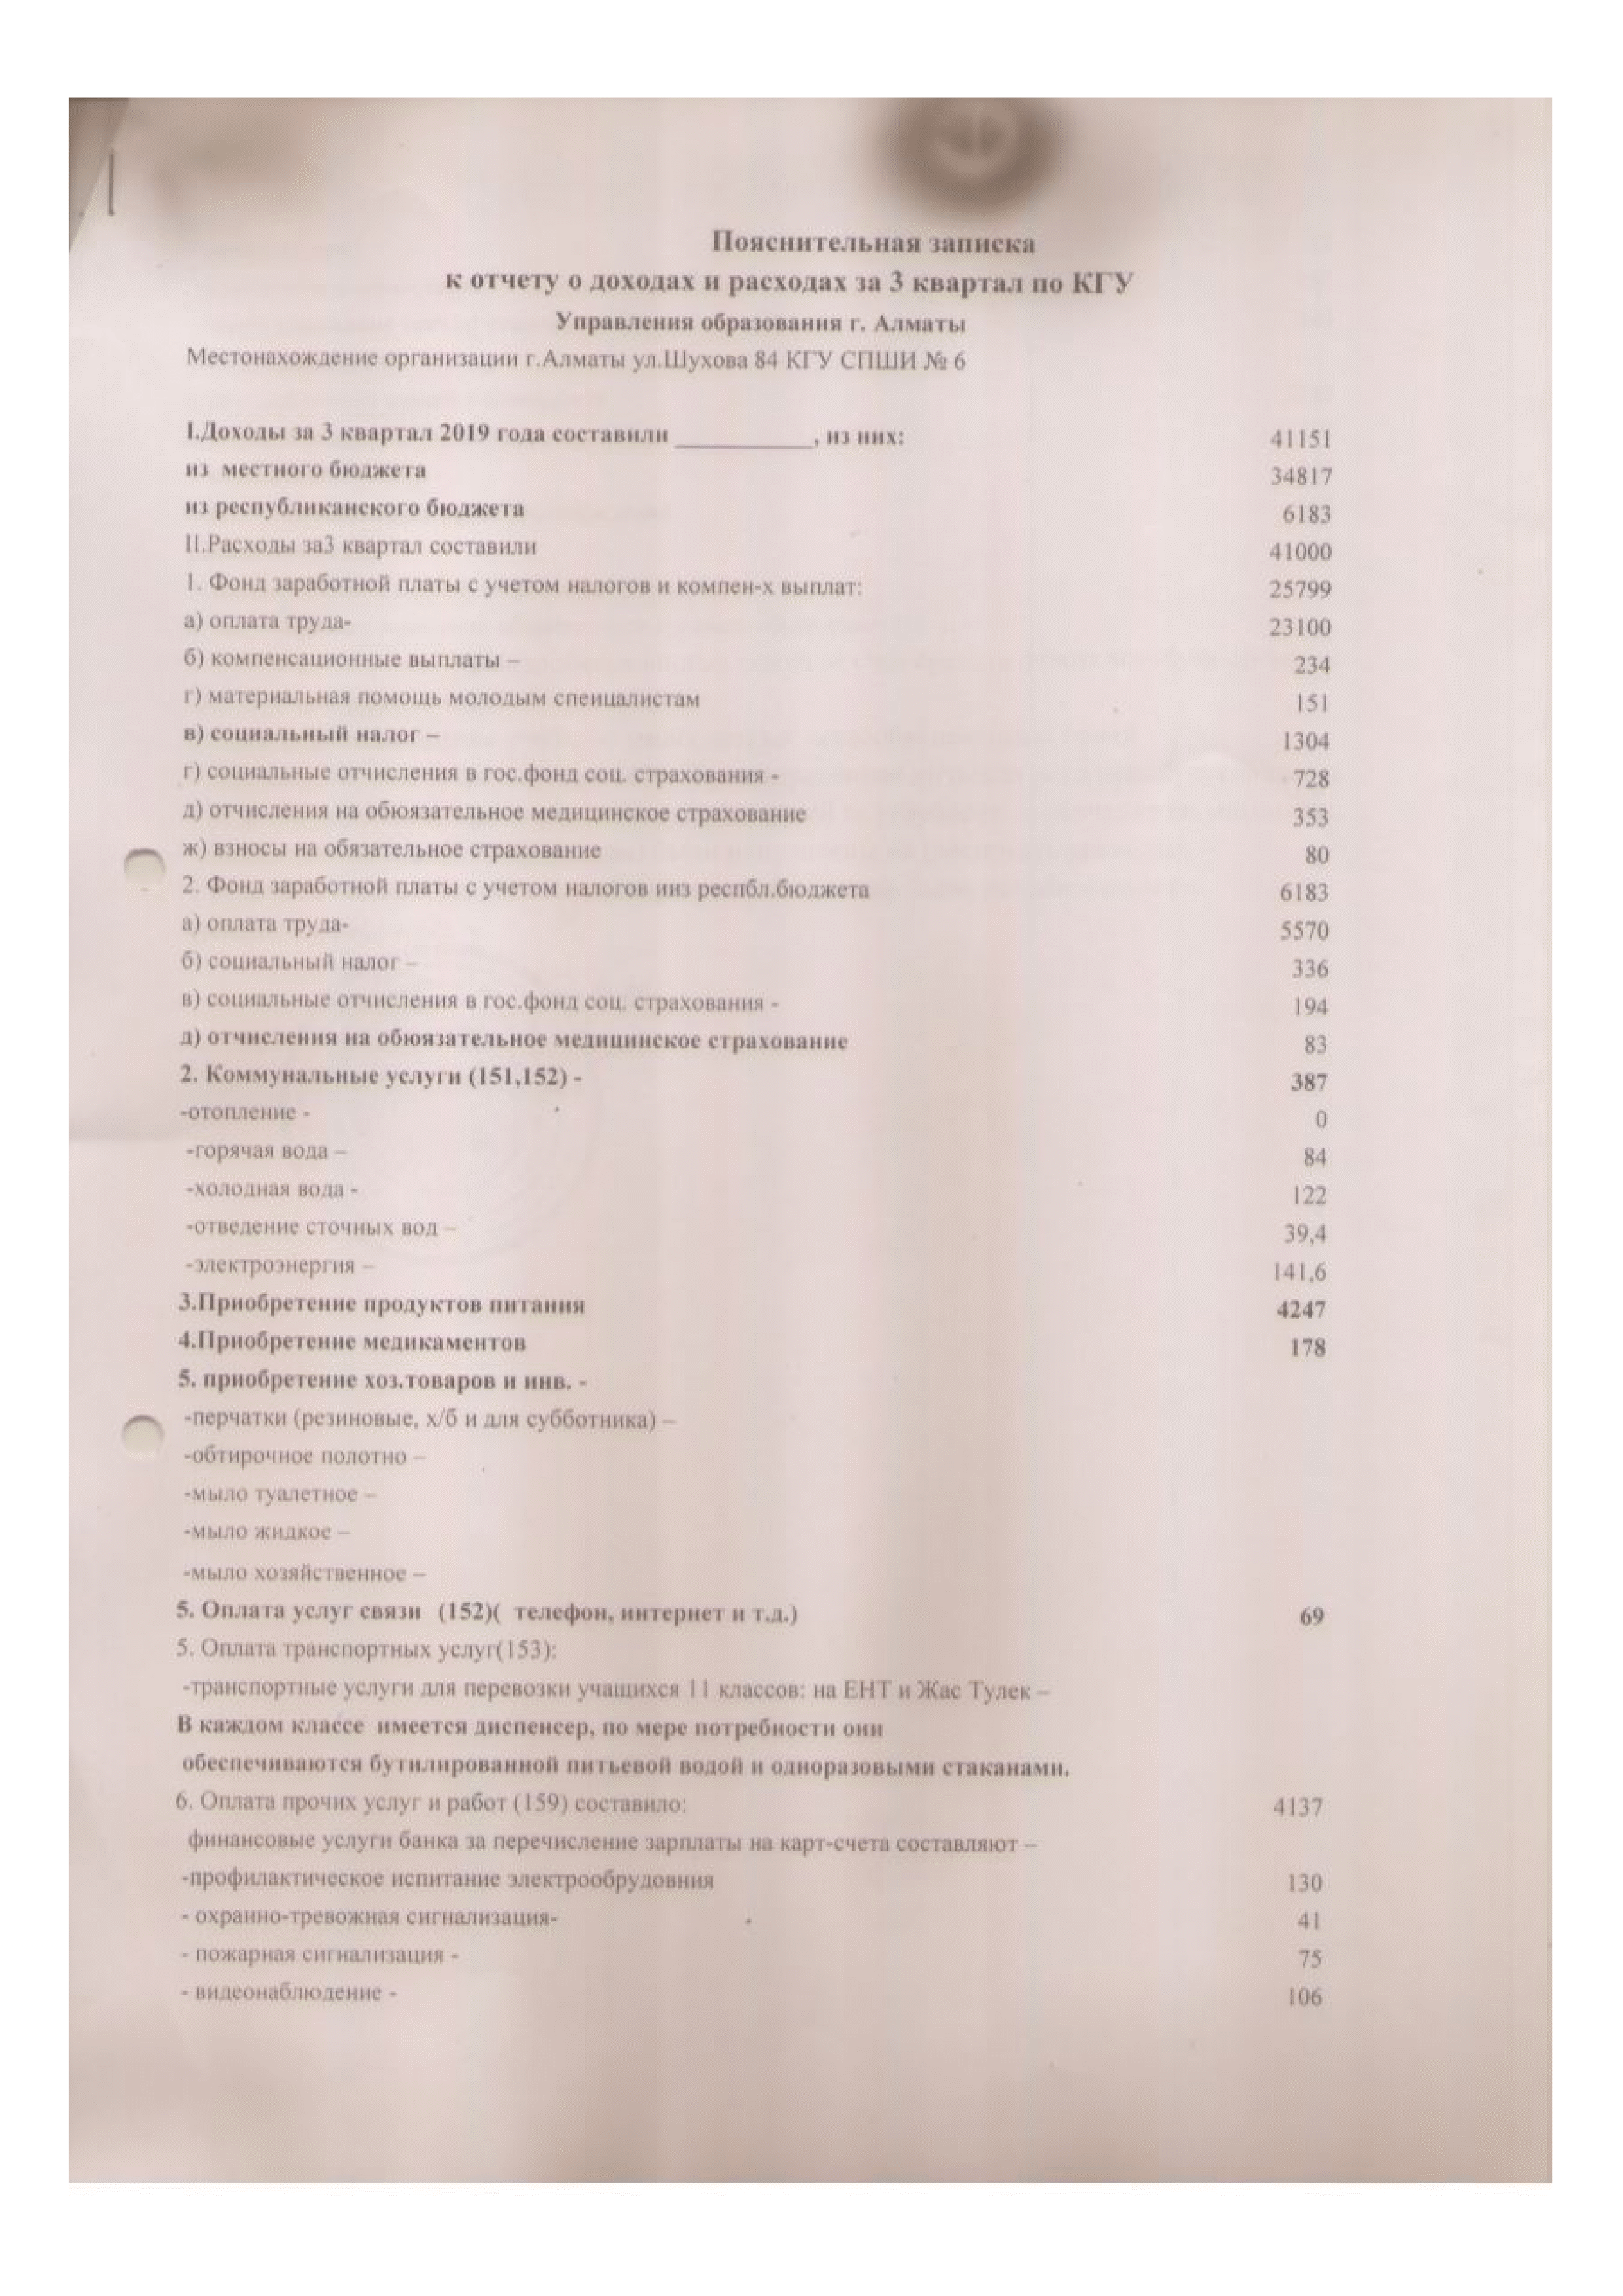 отчет о доходах и расходах за 3 кв